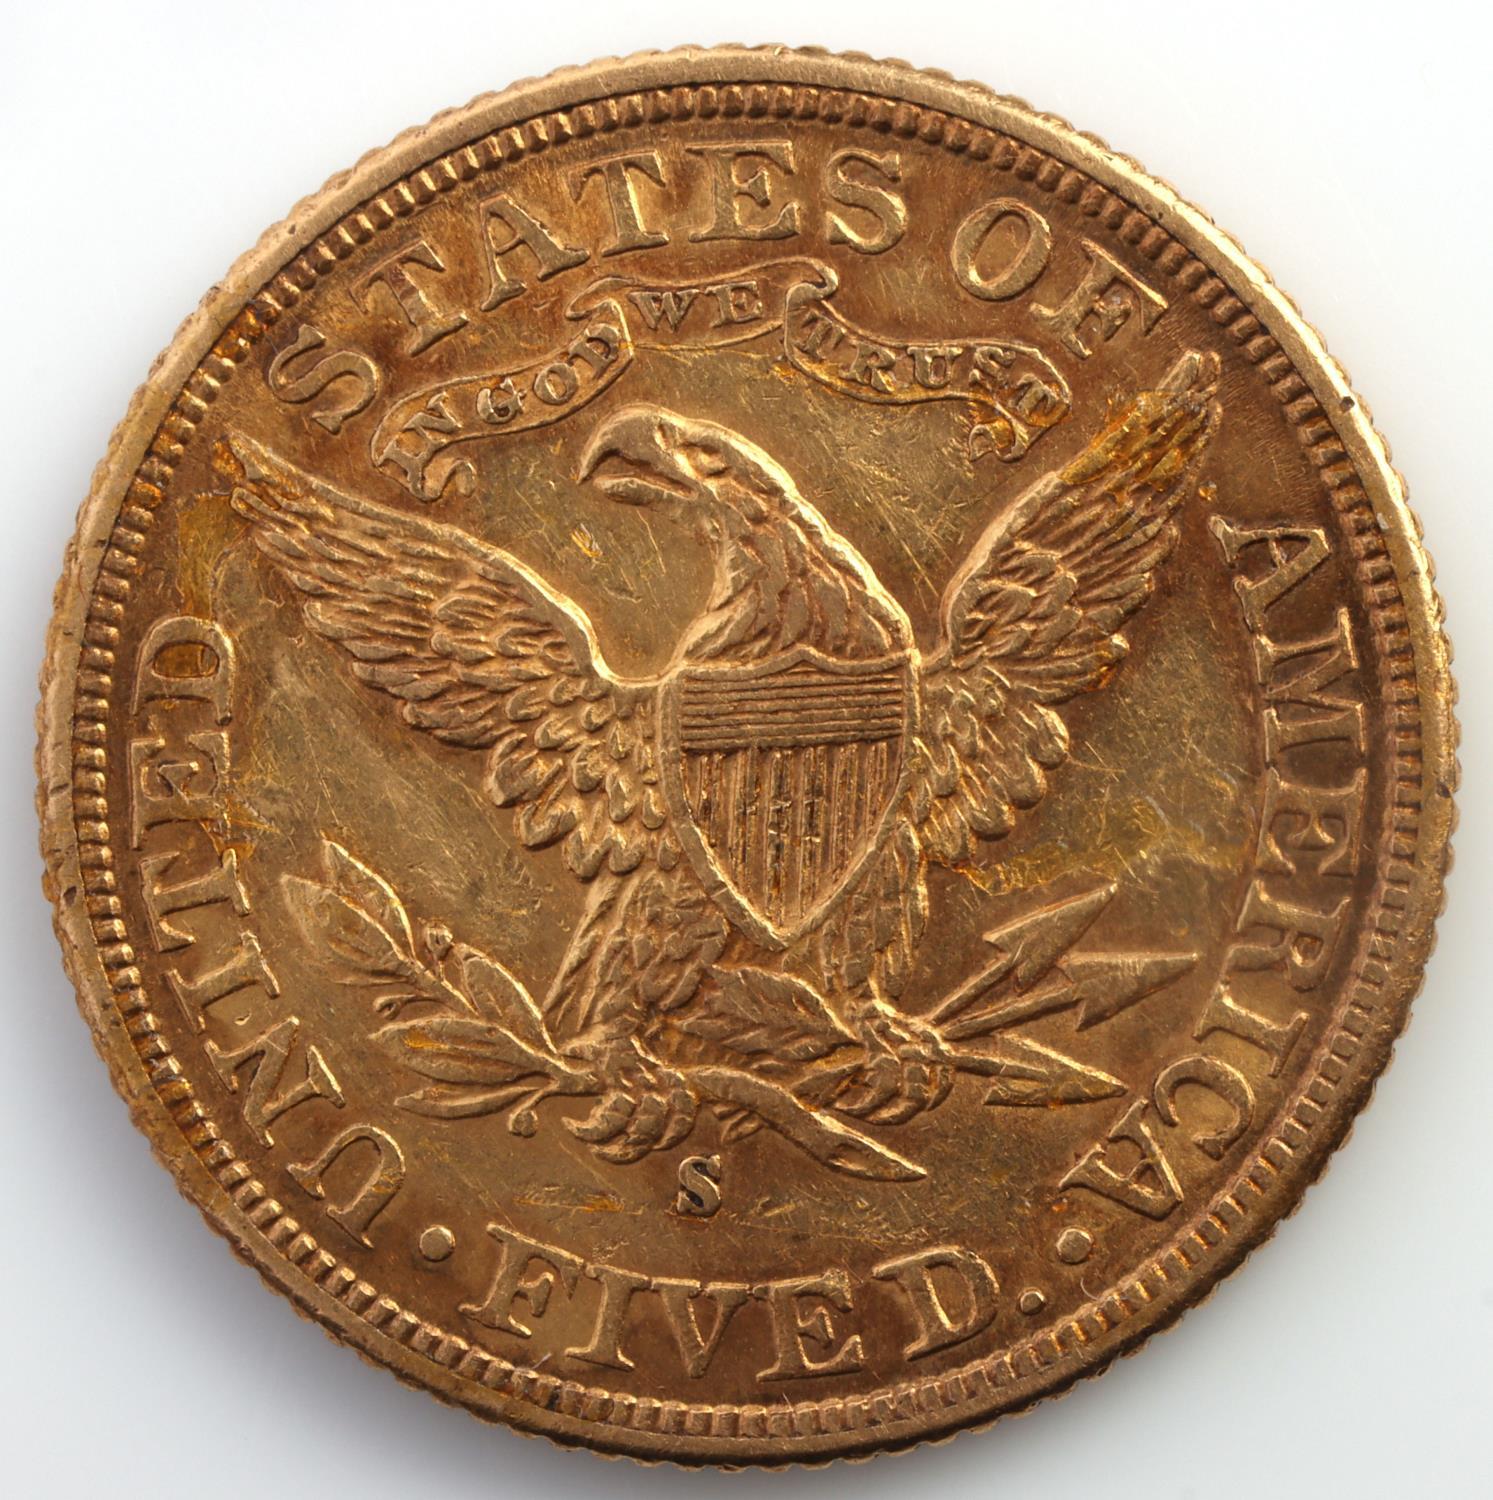 1899 S $5 LIBERTY HEAD HALF EAGLE GOLD COIN